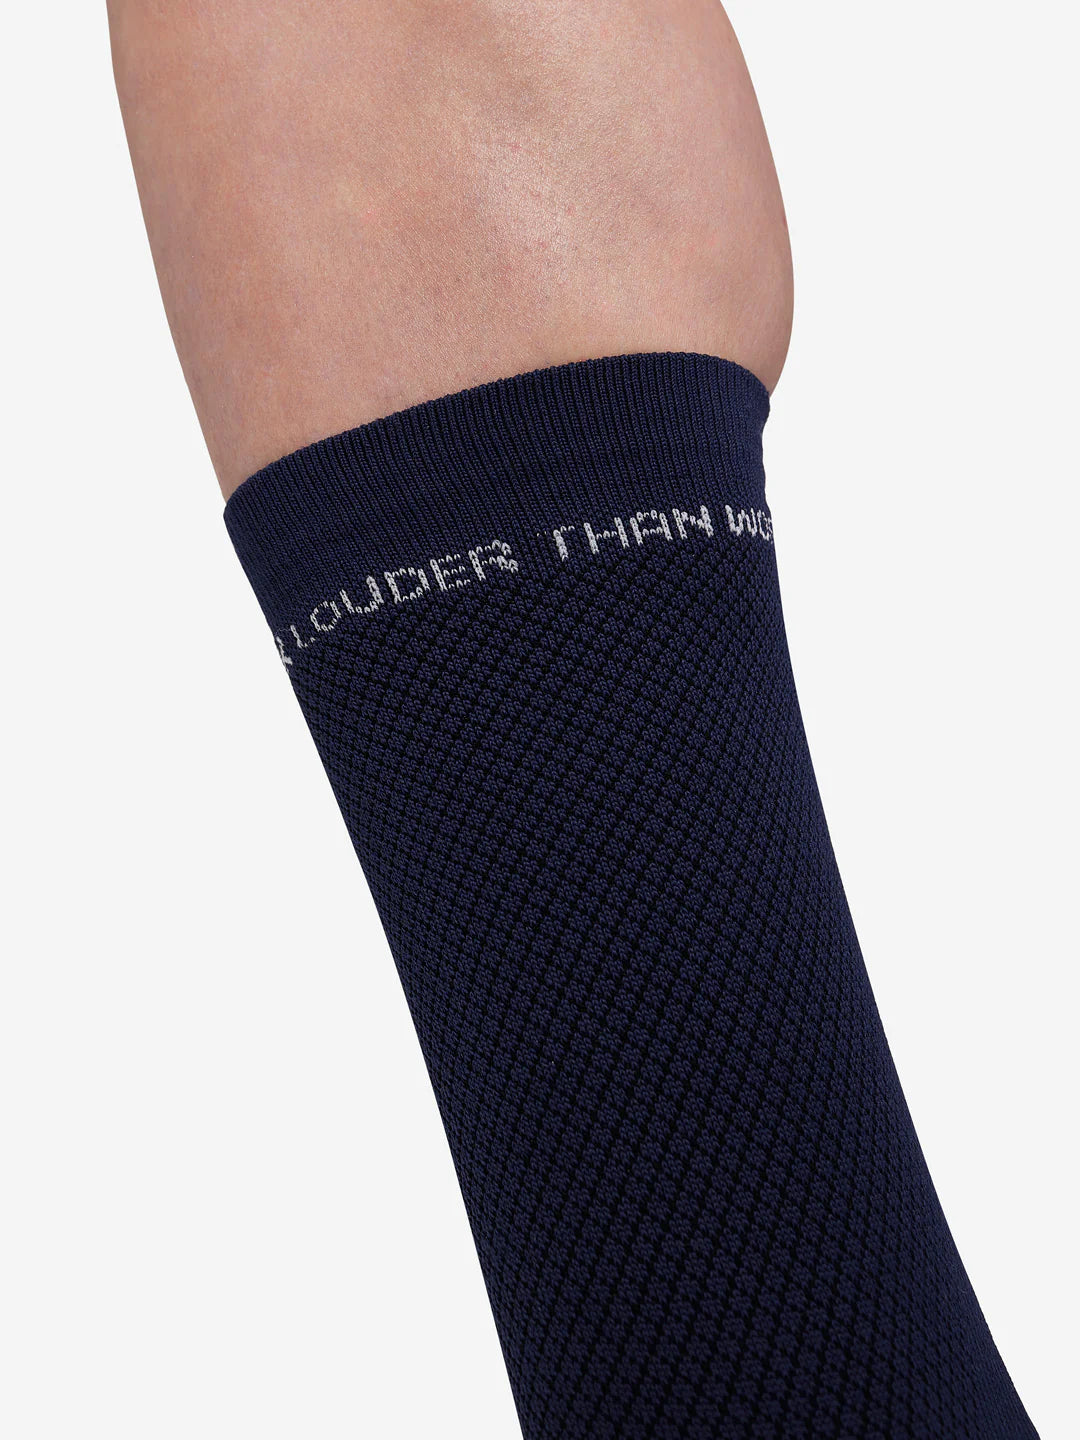 Louder than Words - Cycling Socks - Bundle